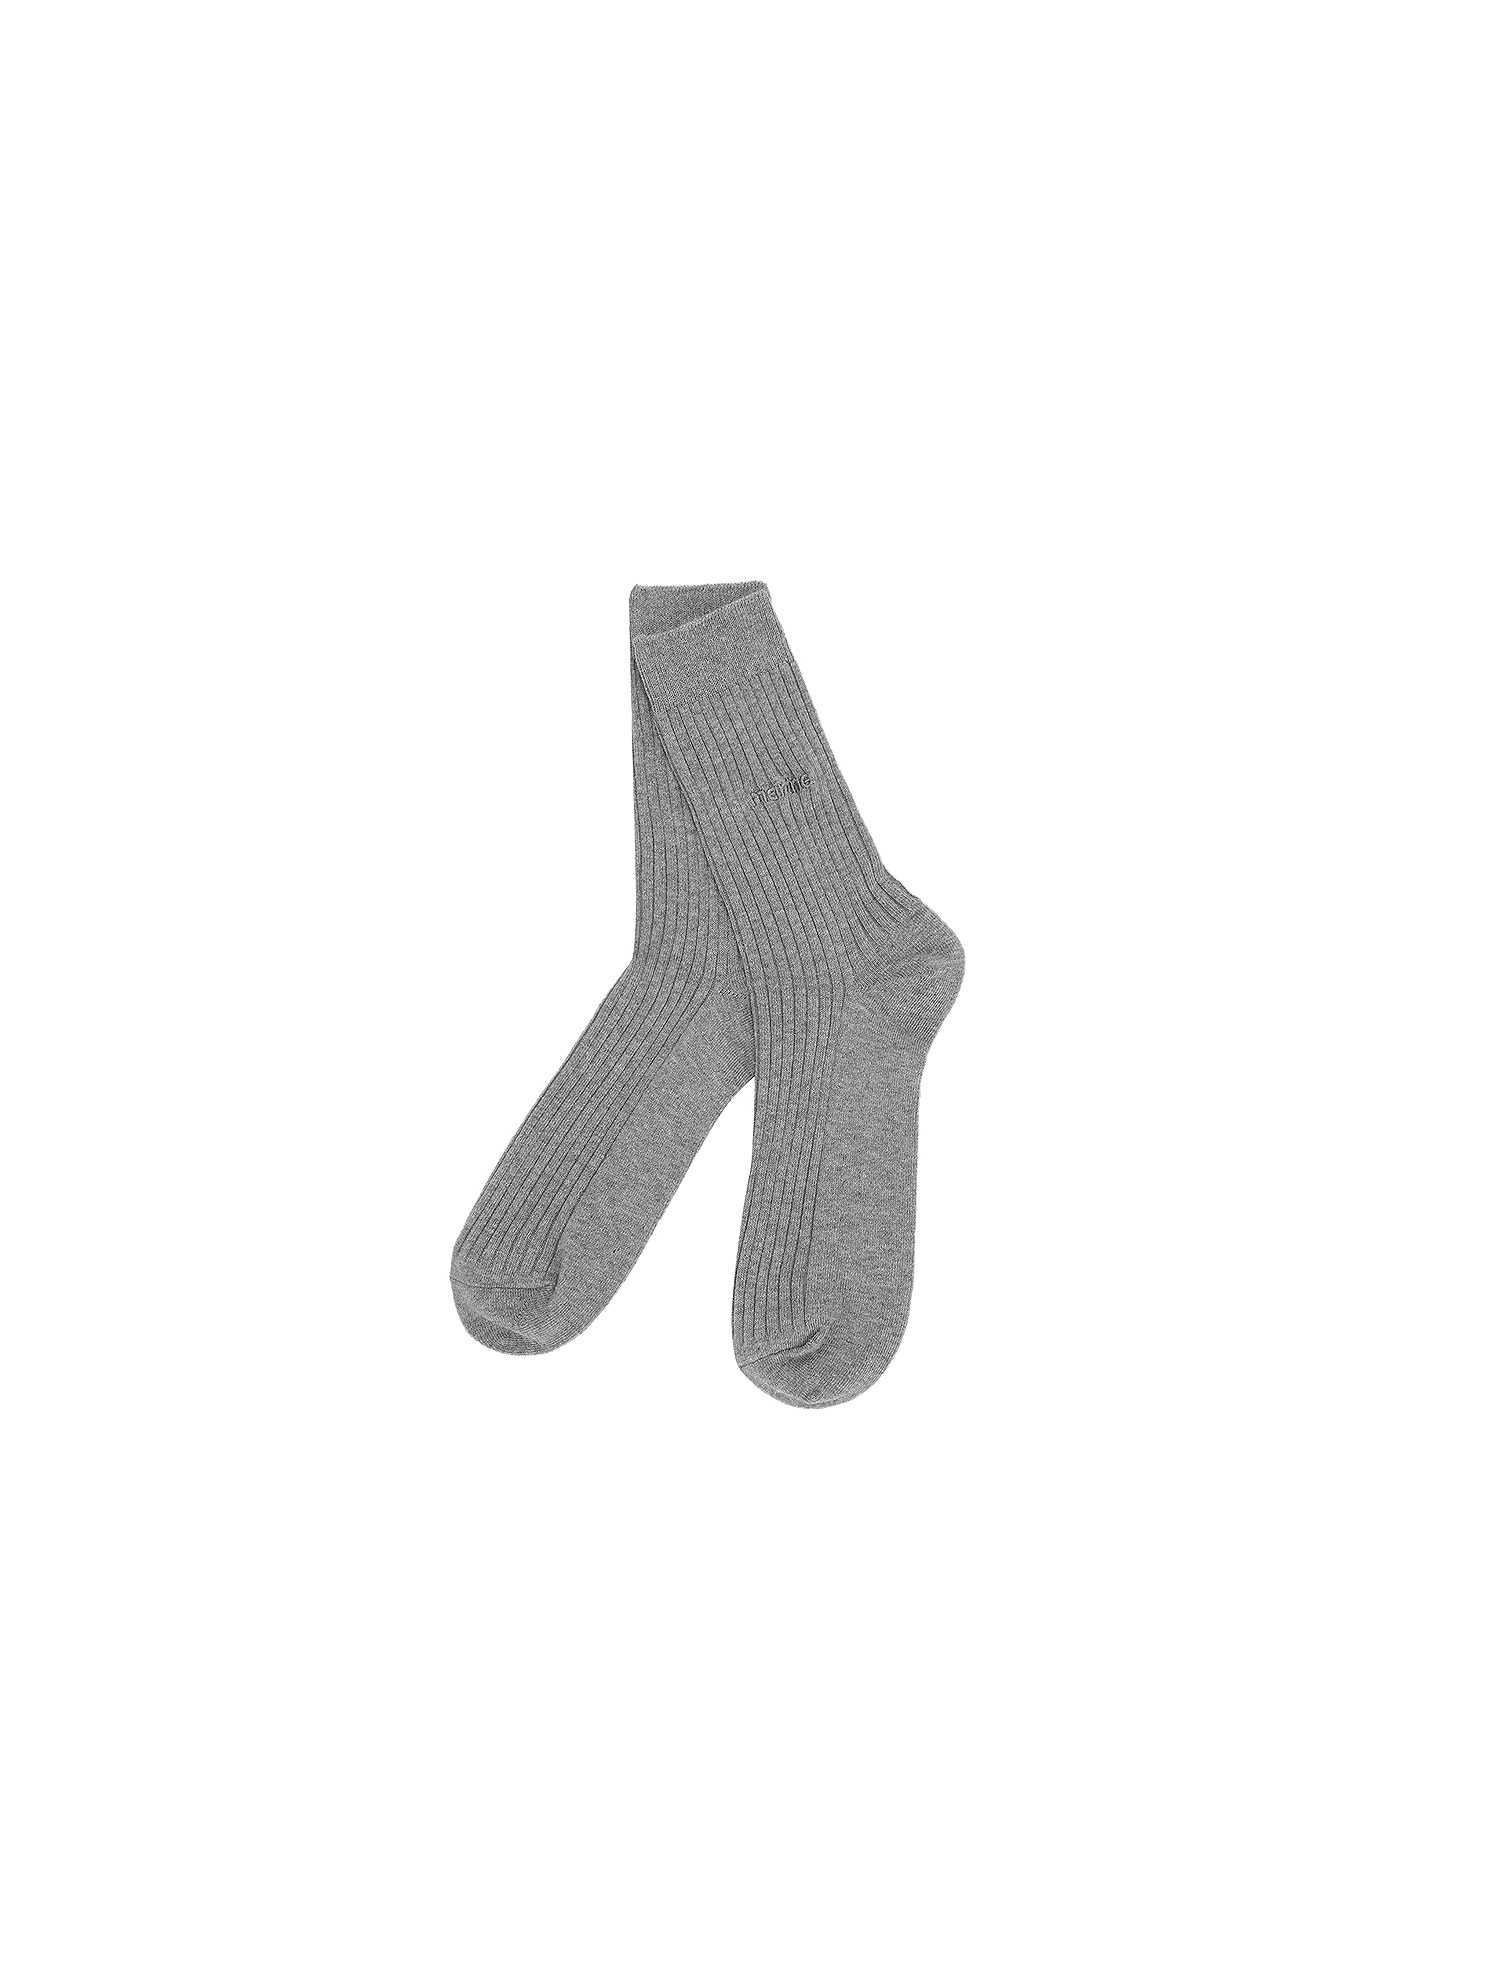 Basic Middle Socks_M/Grey (Men) (QMAESC10736)